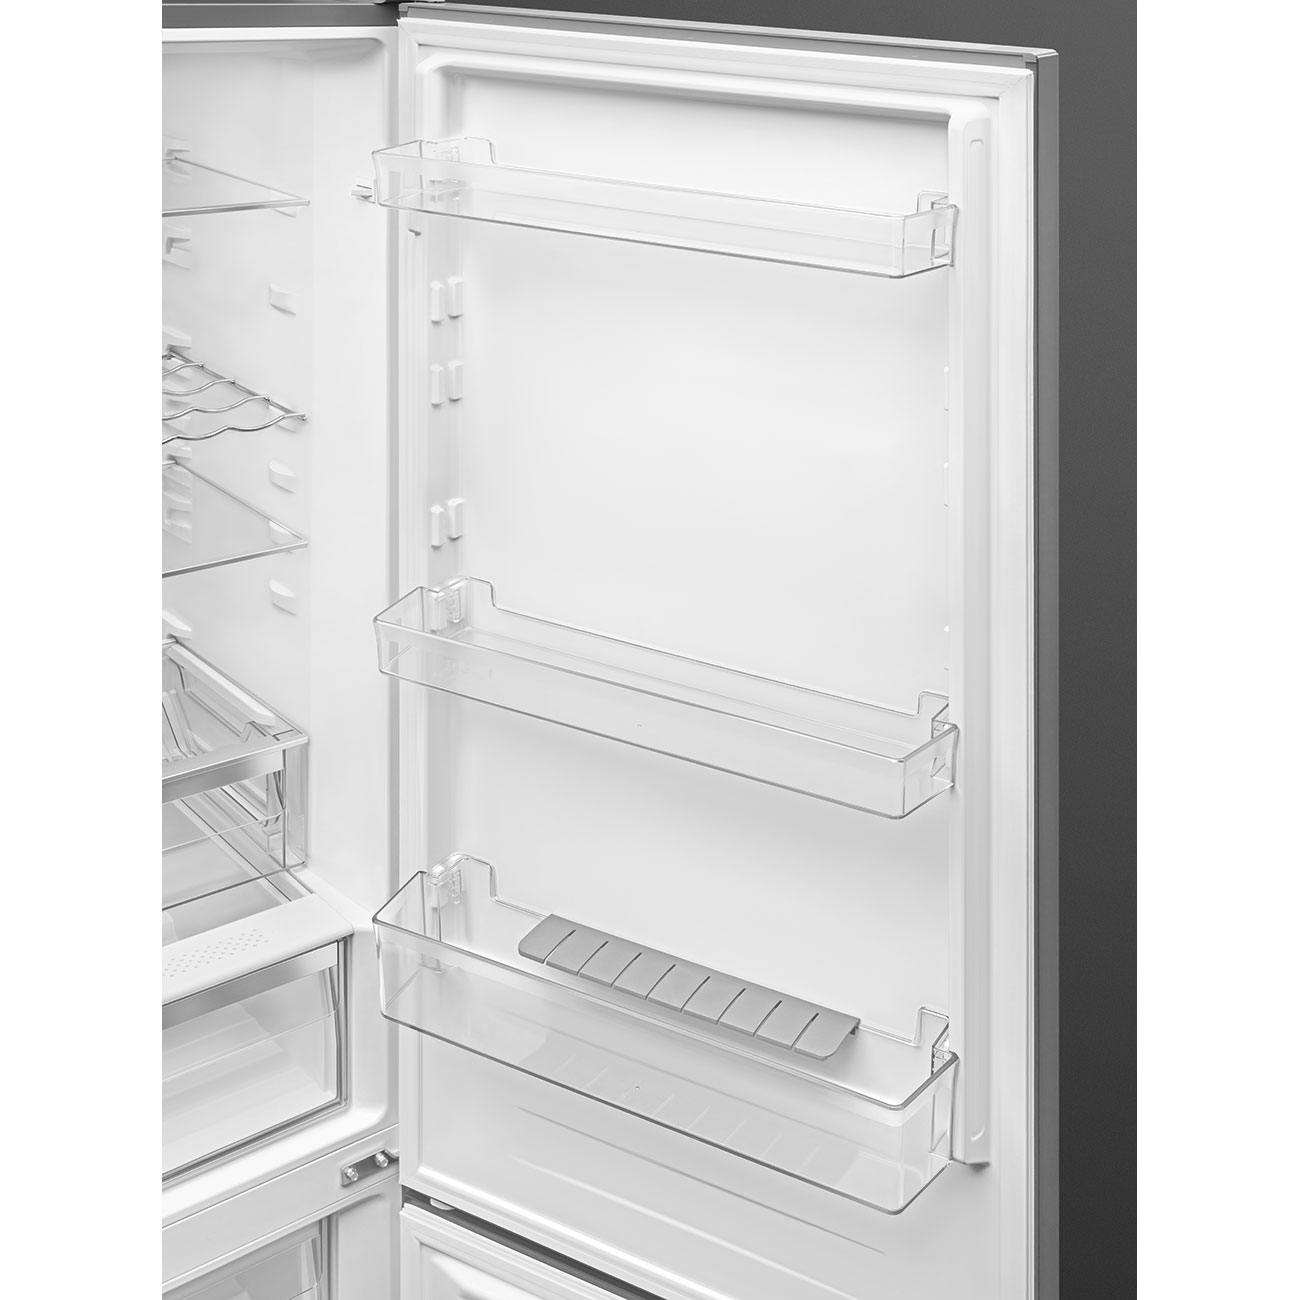 Bottom Mount Free standing refrigerator - Smeg_6